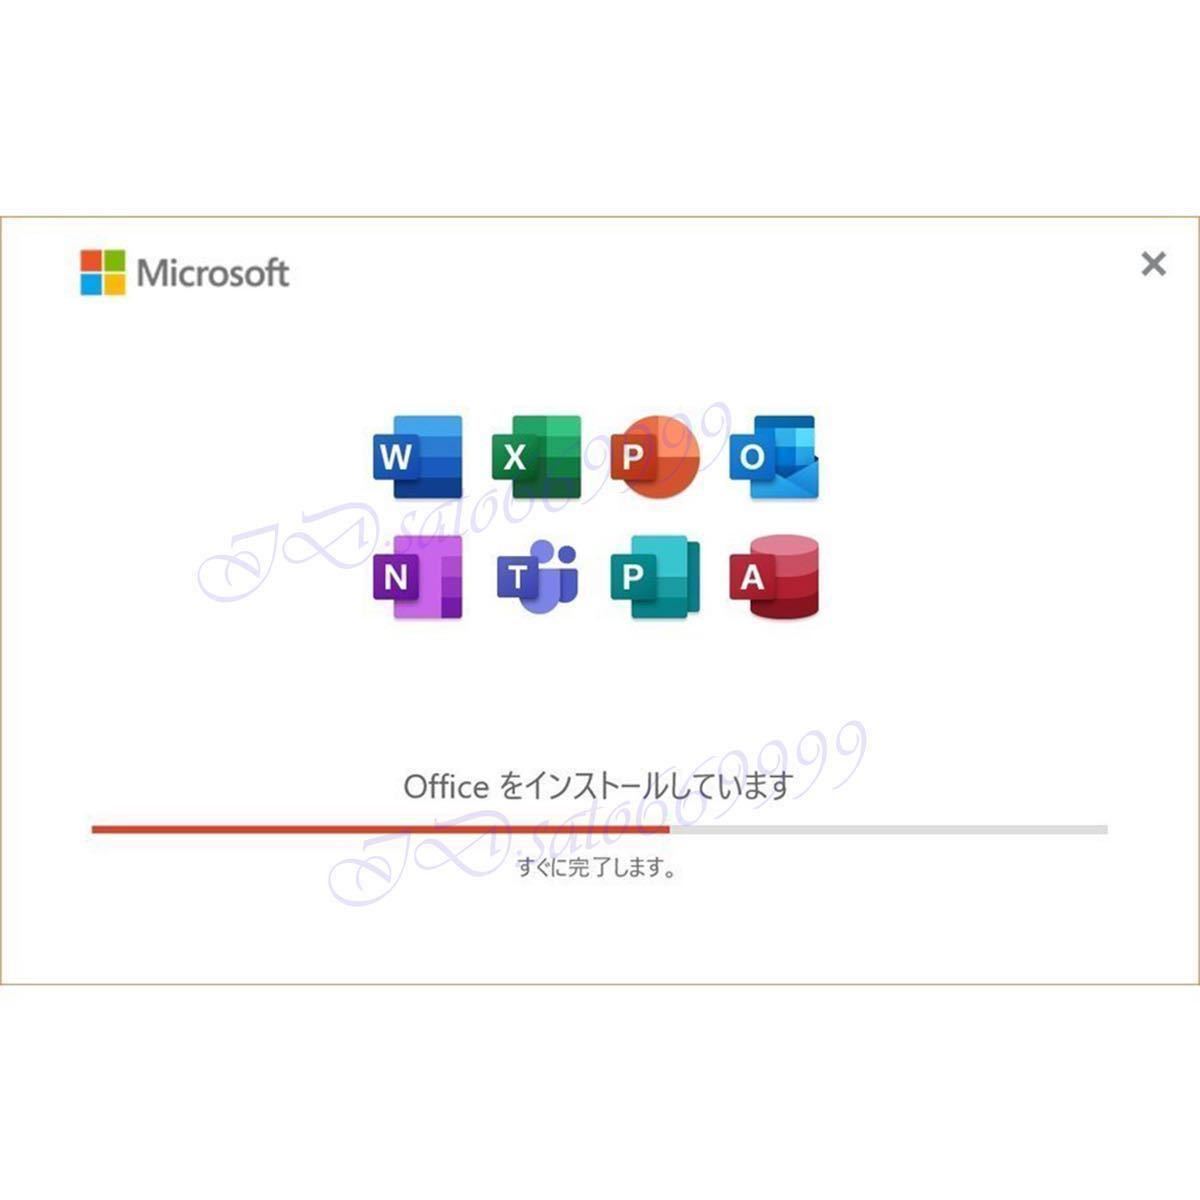 Microsoft Office 2021 Professional Plus 正規 プロダクトキー 32/64bit対応 Access Word Excel PowerPoint 認証保証 日本語 永続版_画像3